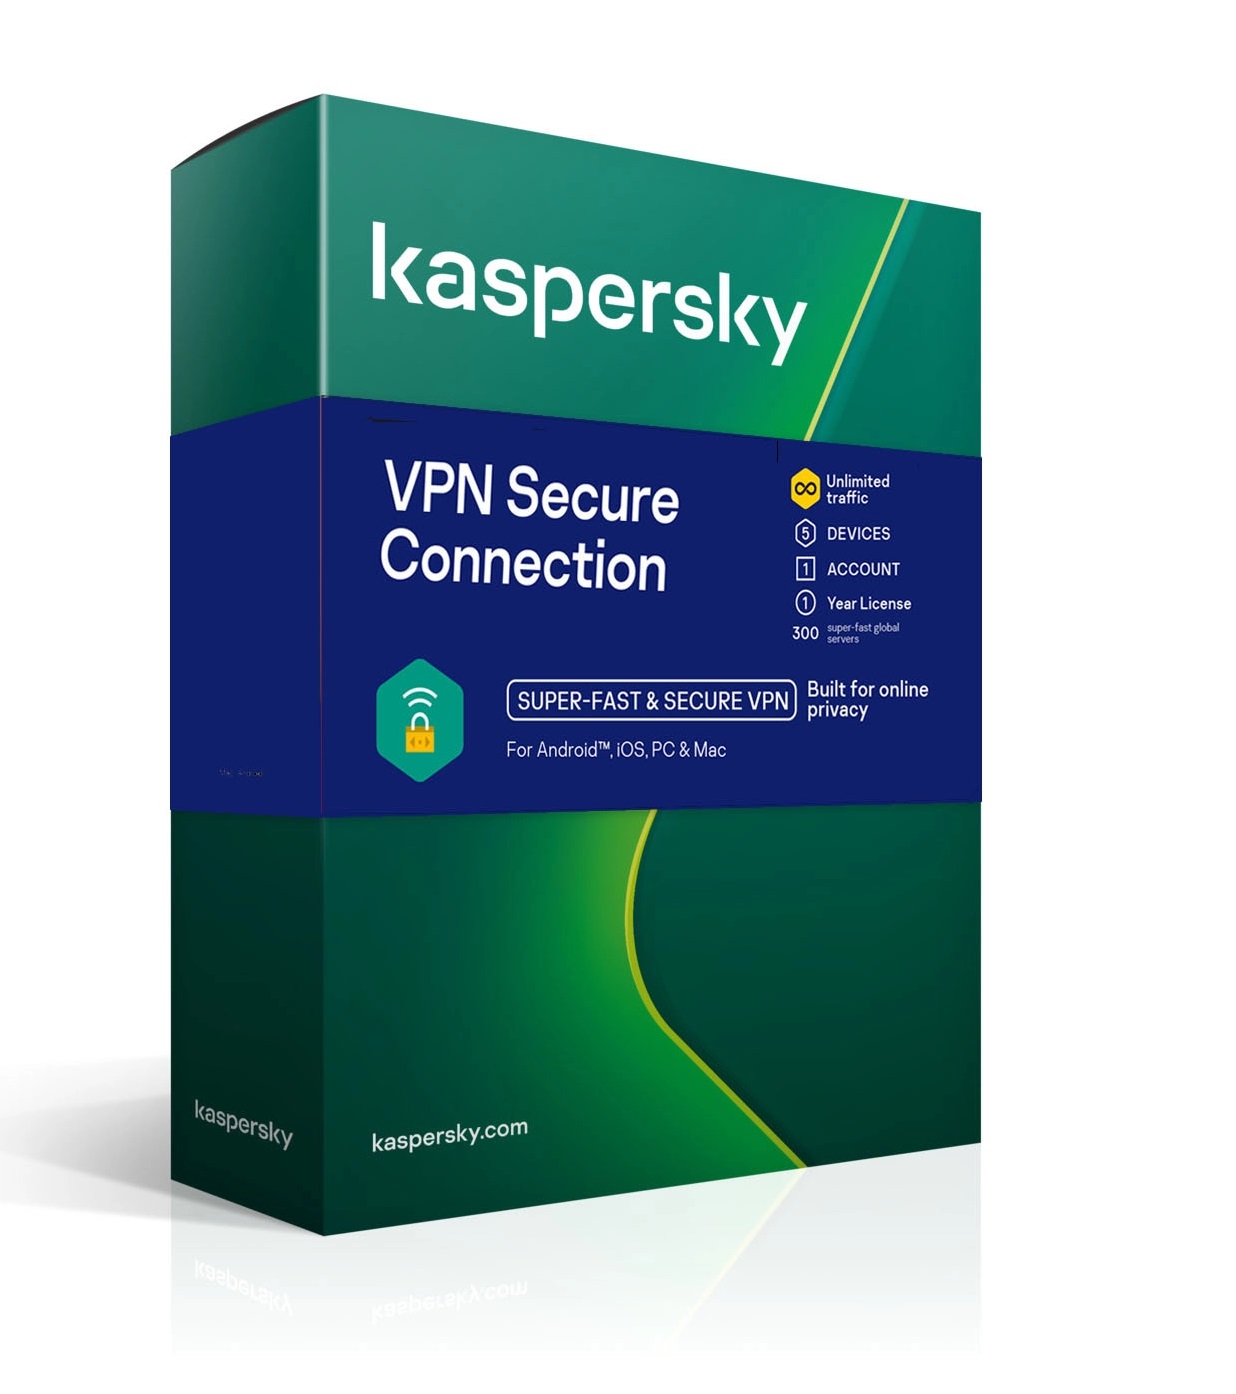 Kaspersky VPN secure